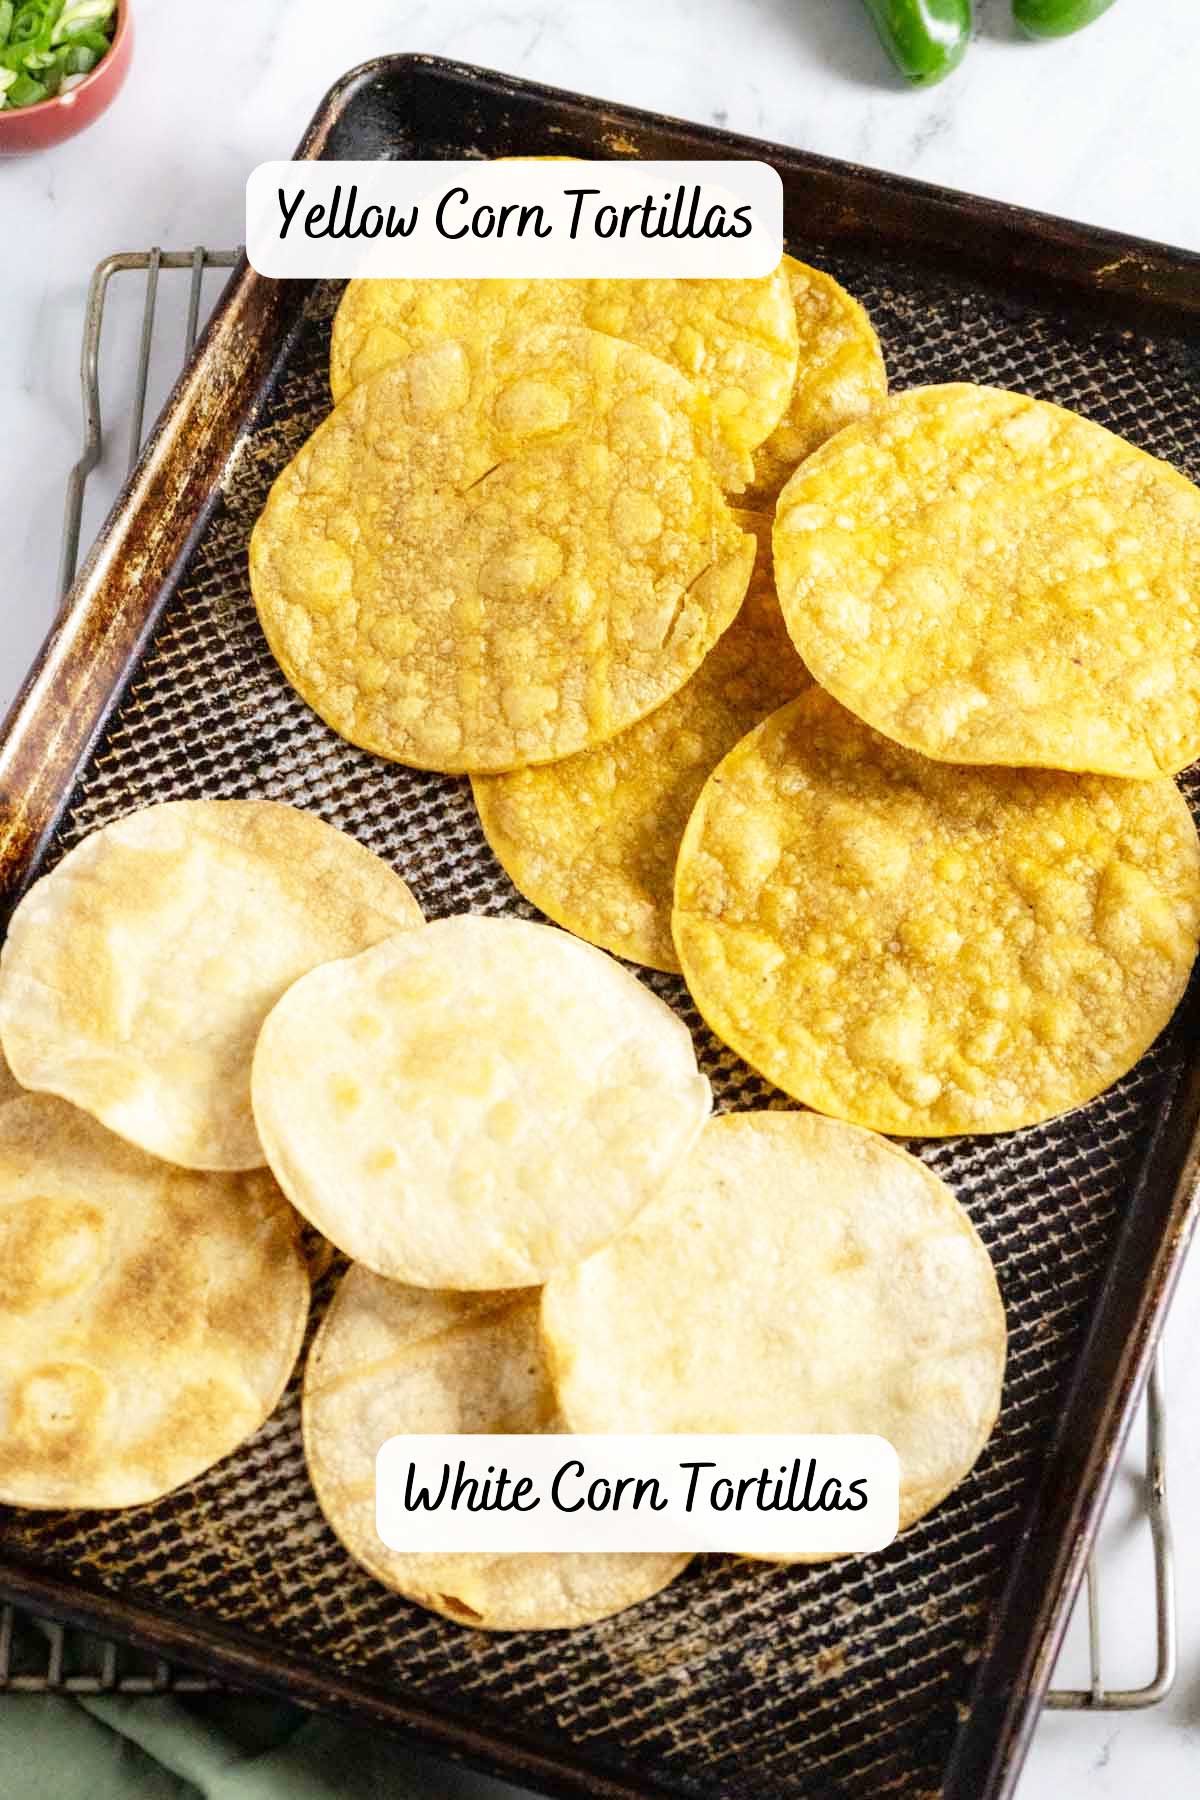 White corn and yellow corn tortillas on a baking sheet.